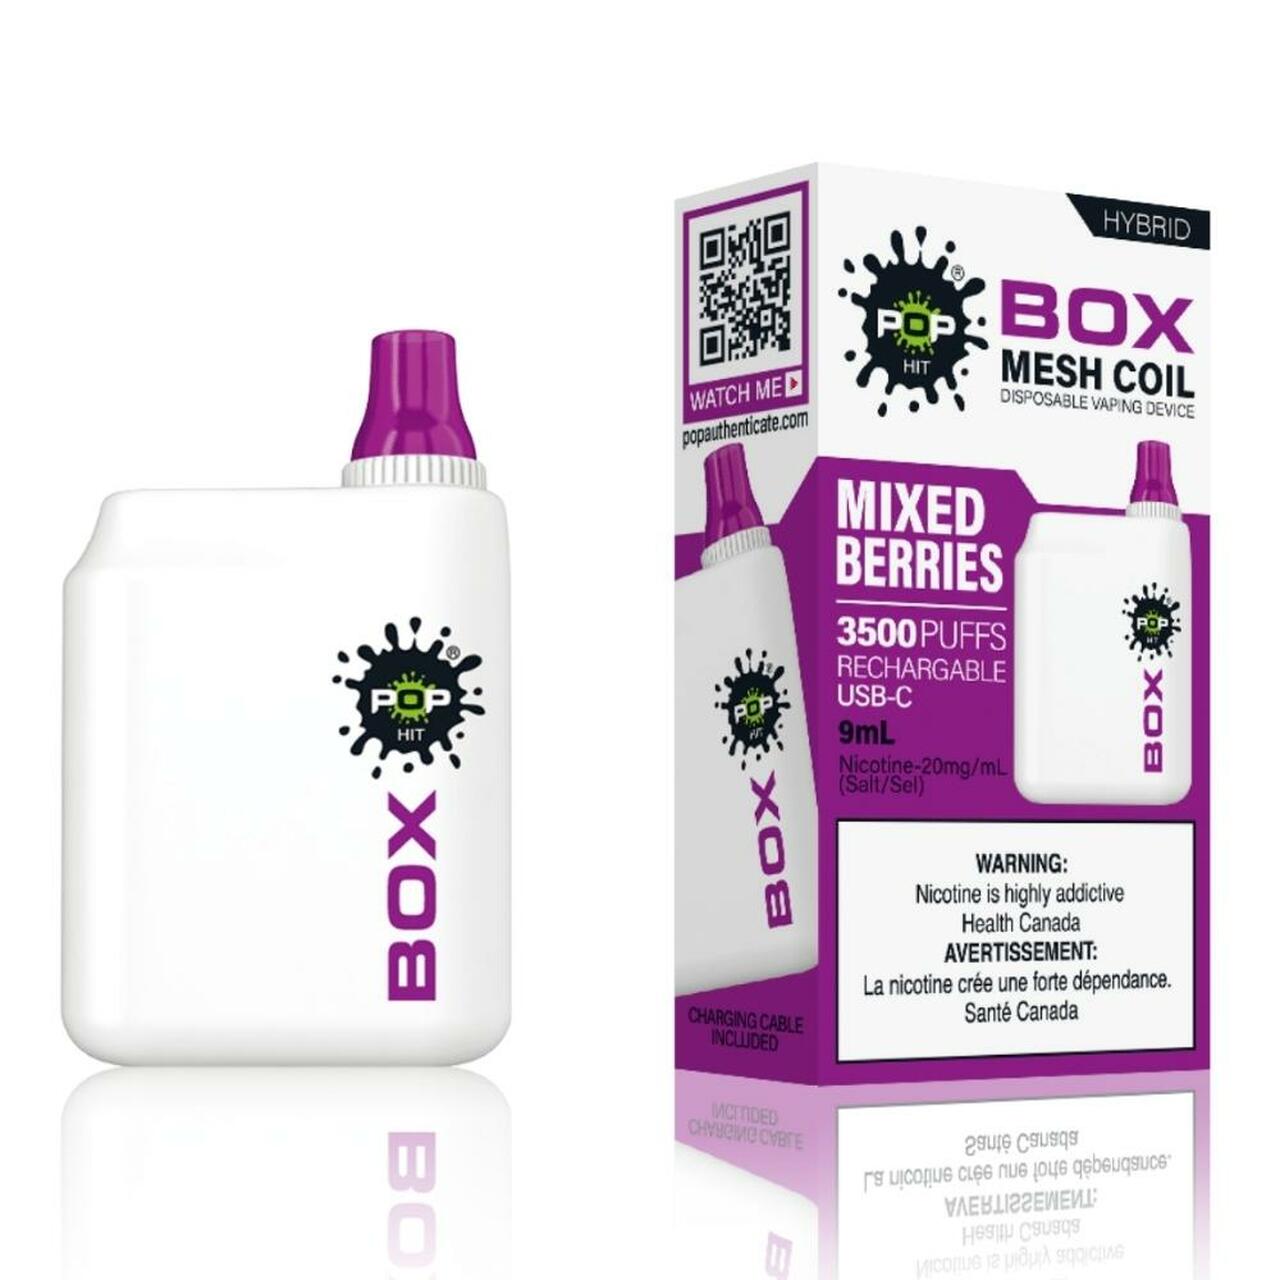 Mixed Berries - Pop Hybrid BOX 3500 Puffs - 5pc/box